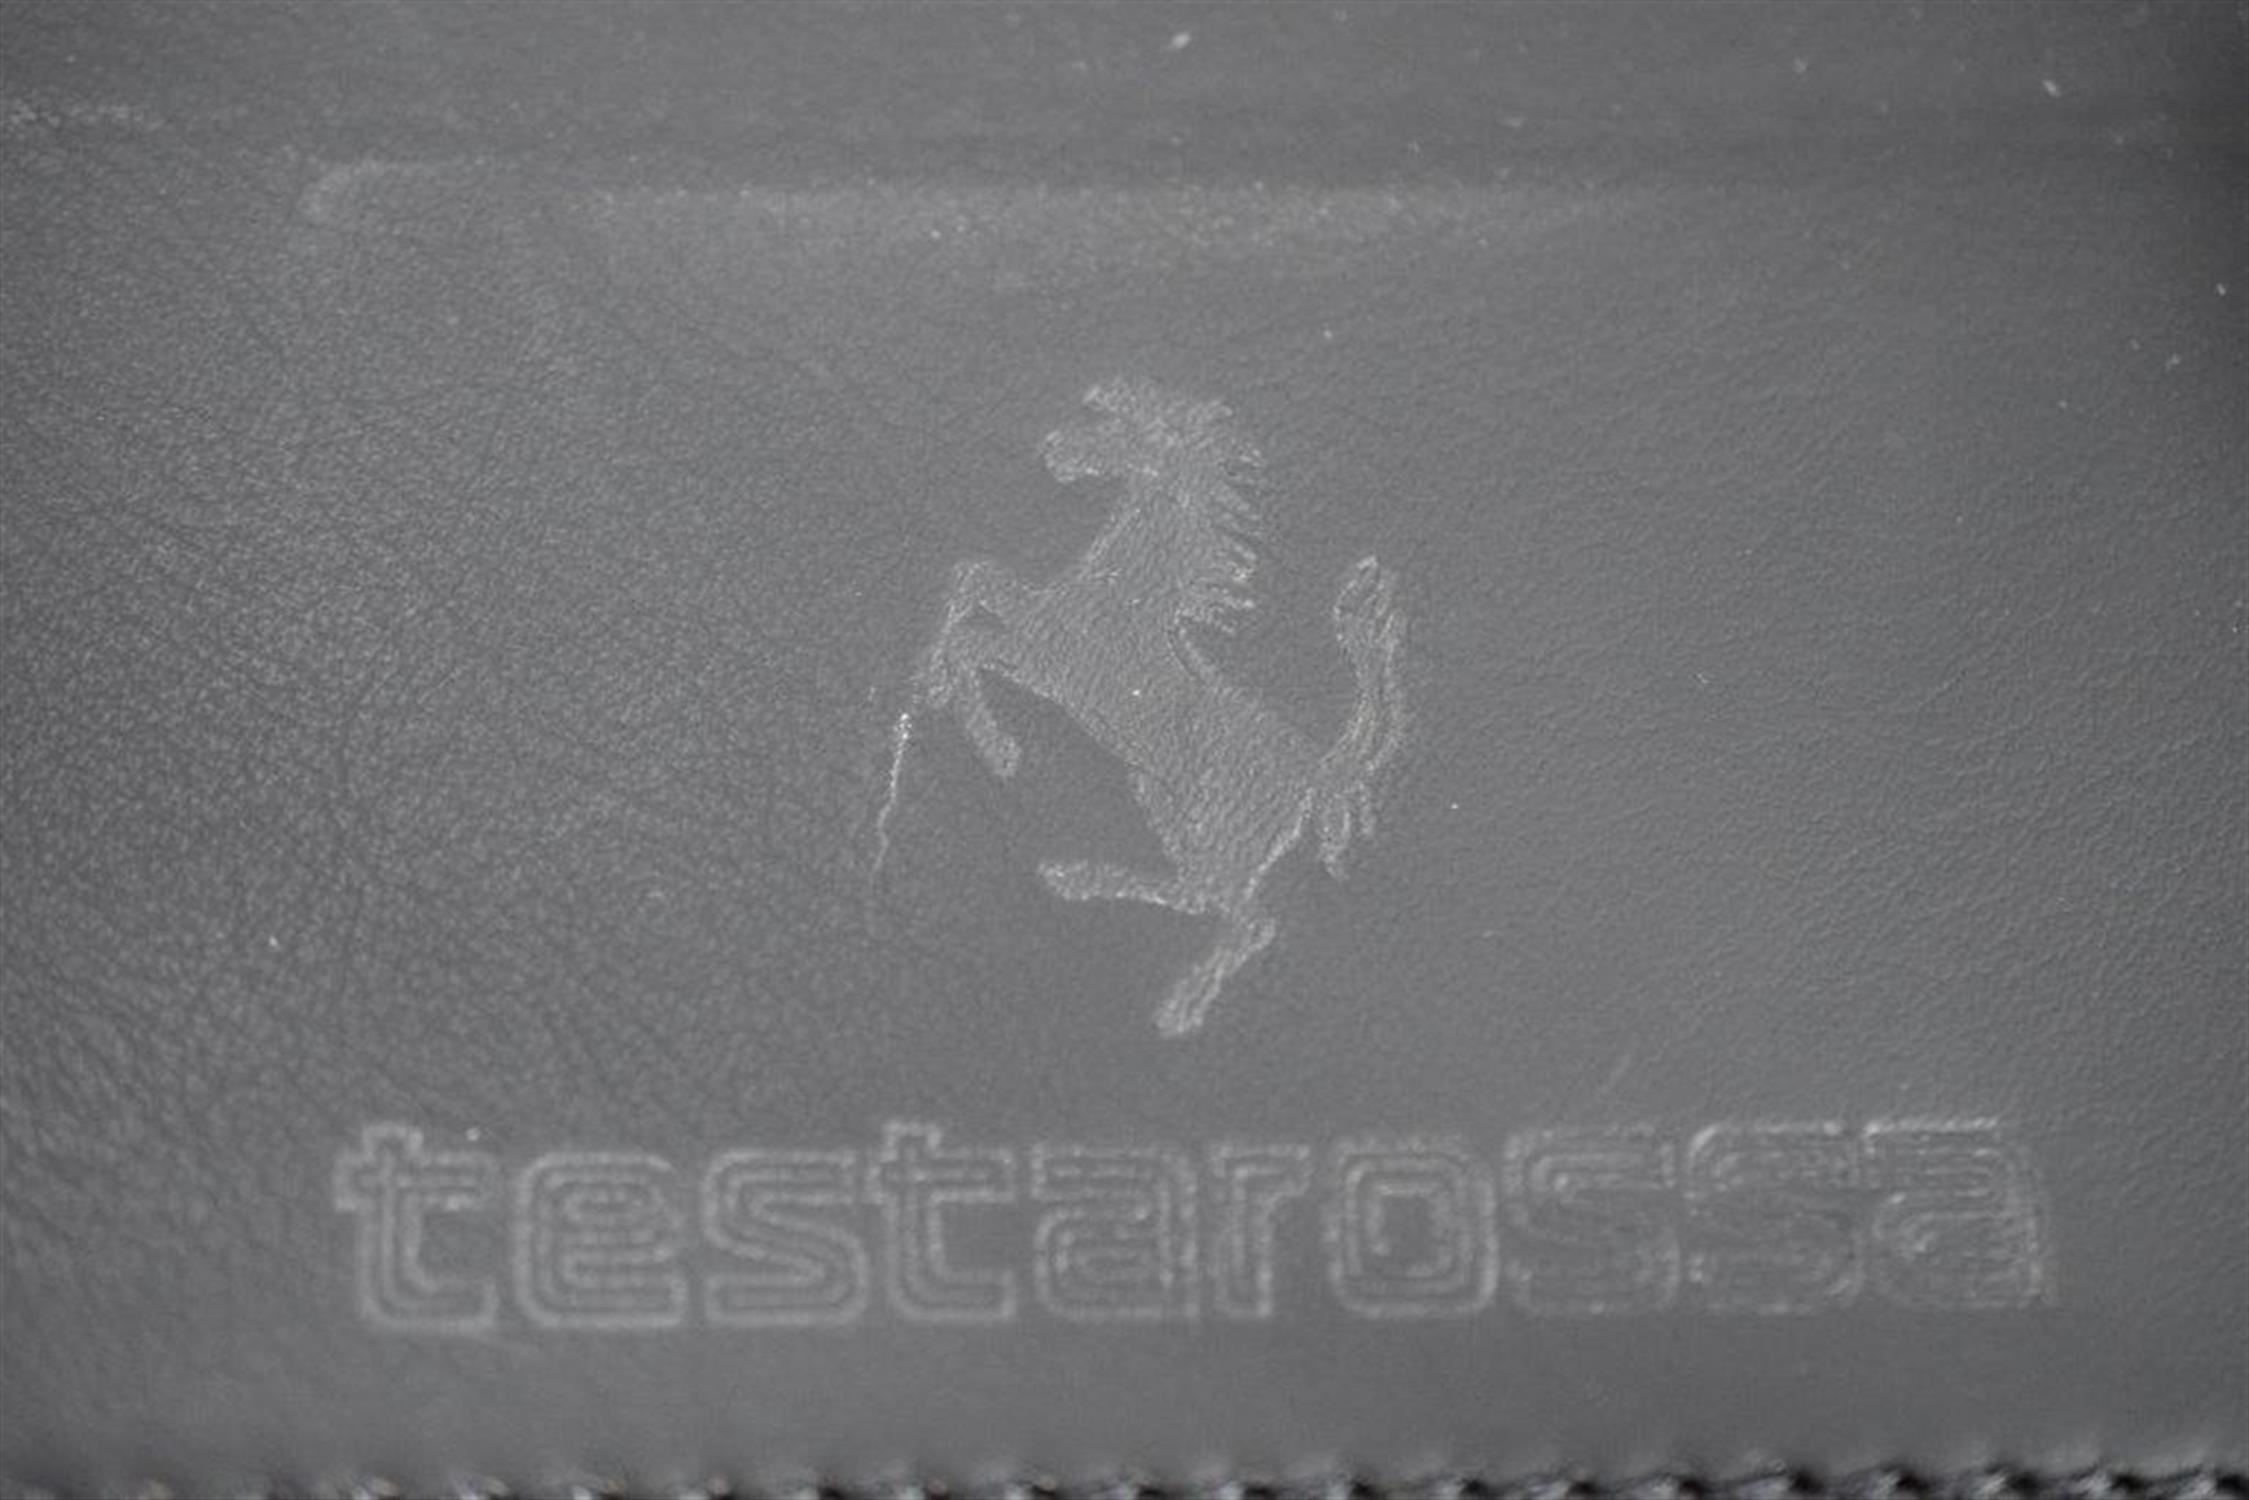 Ferrari Testarossa Six-Piece Black Leather Luggage Set by Schedoni - Image 3 of 7